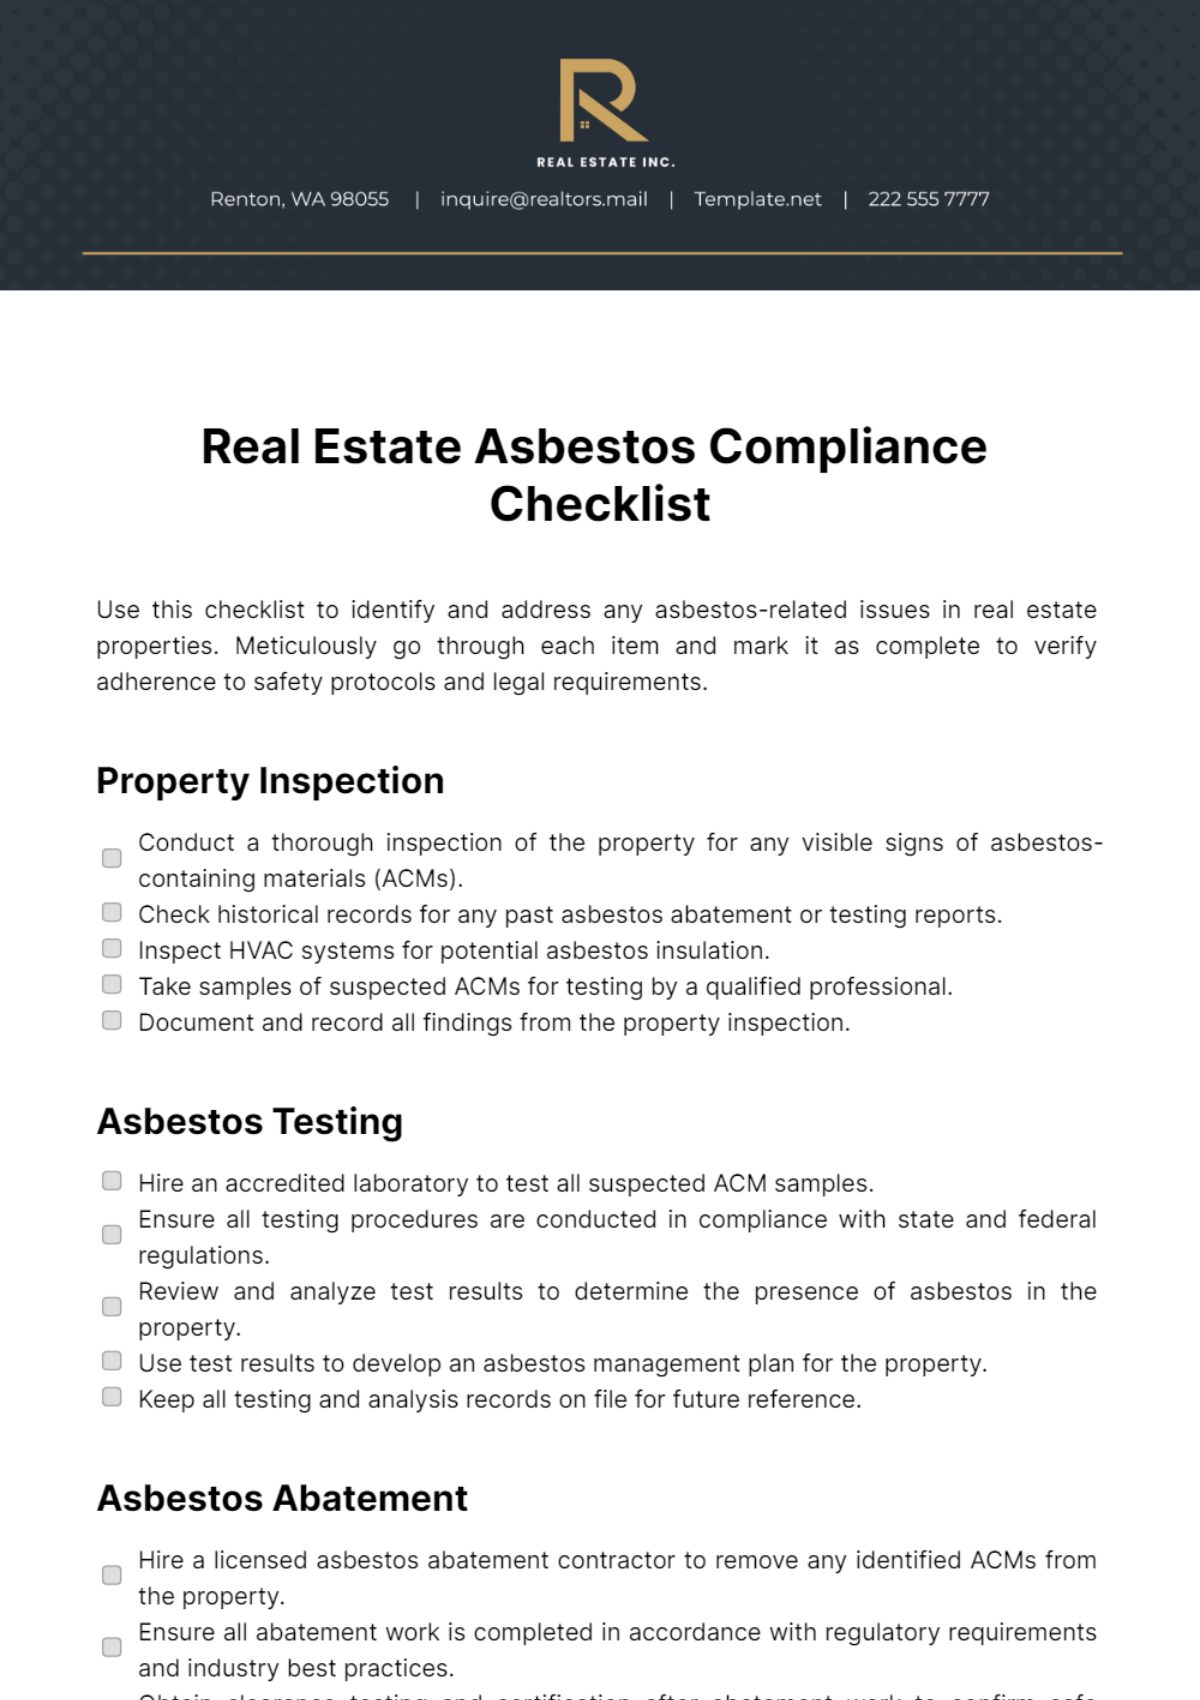 Real Estate Asbestos Compliance Checklist Template